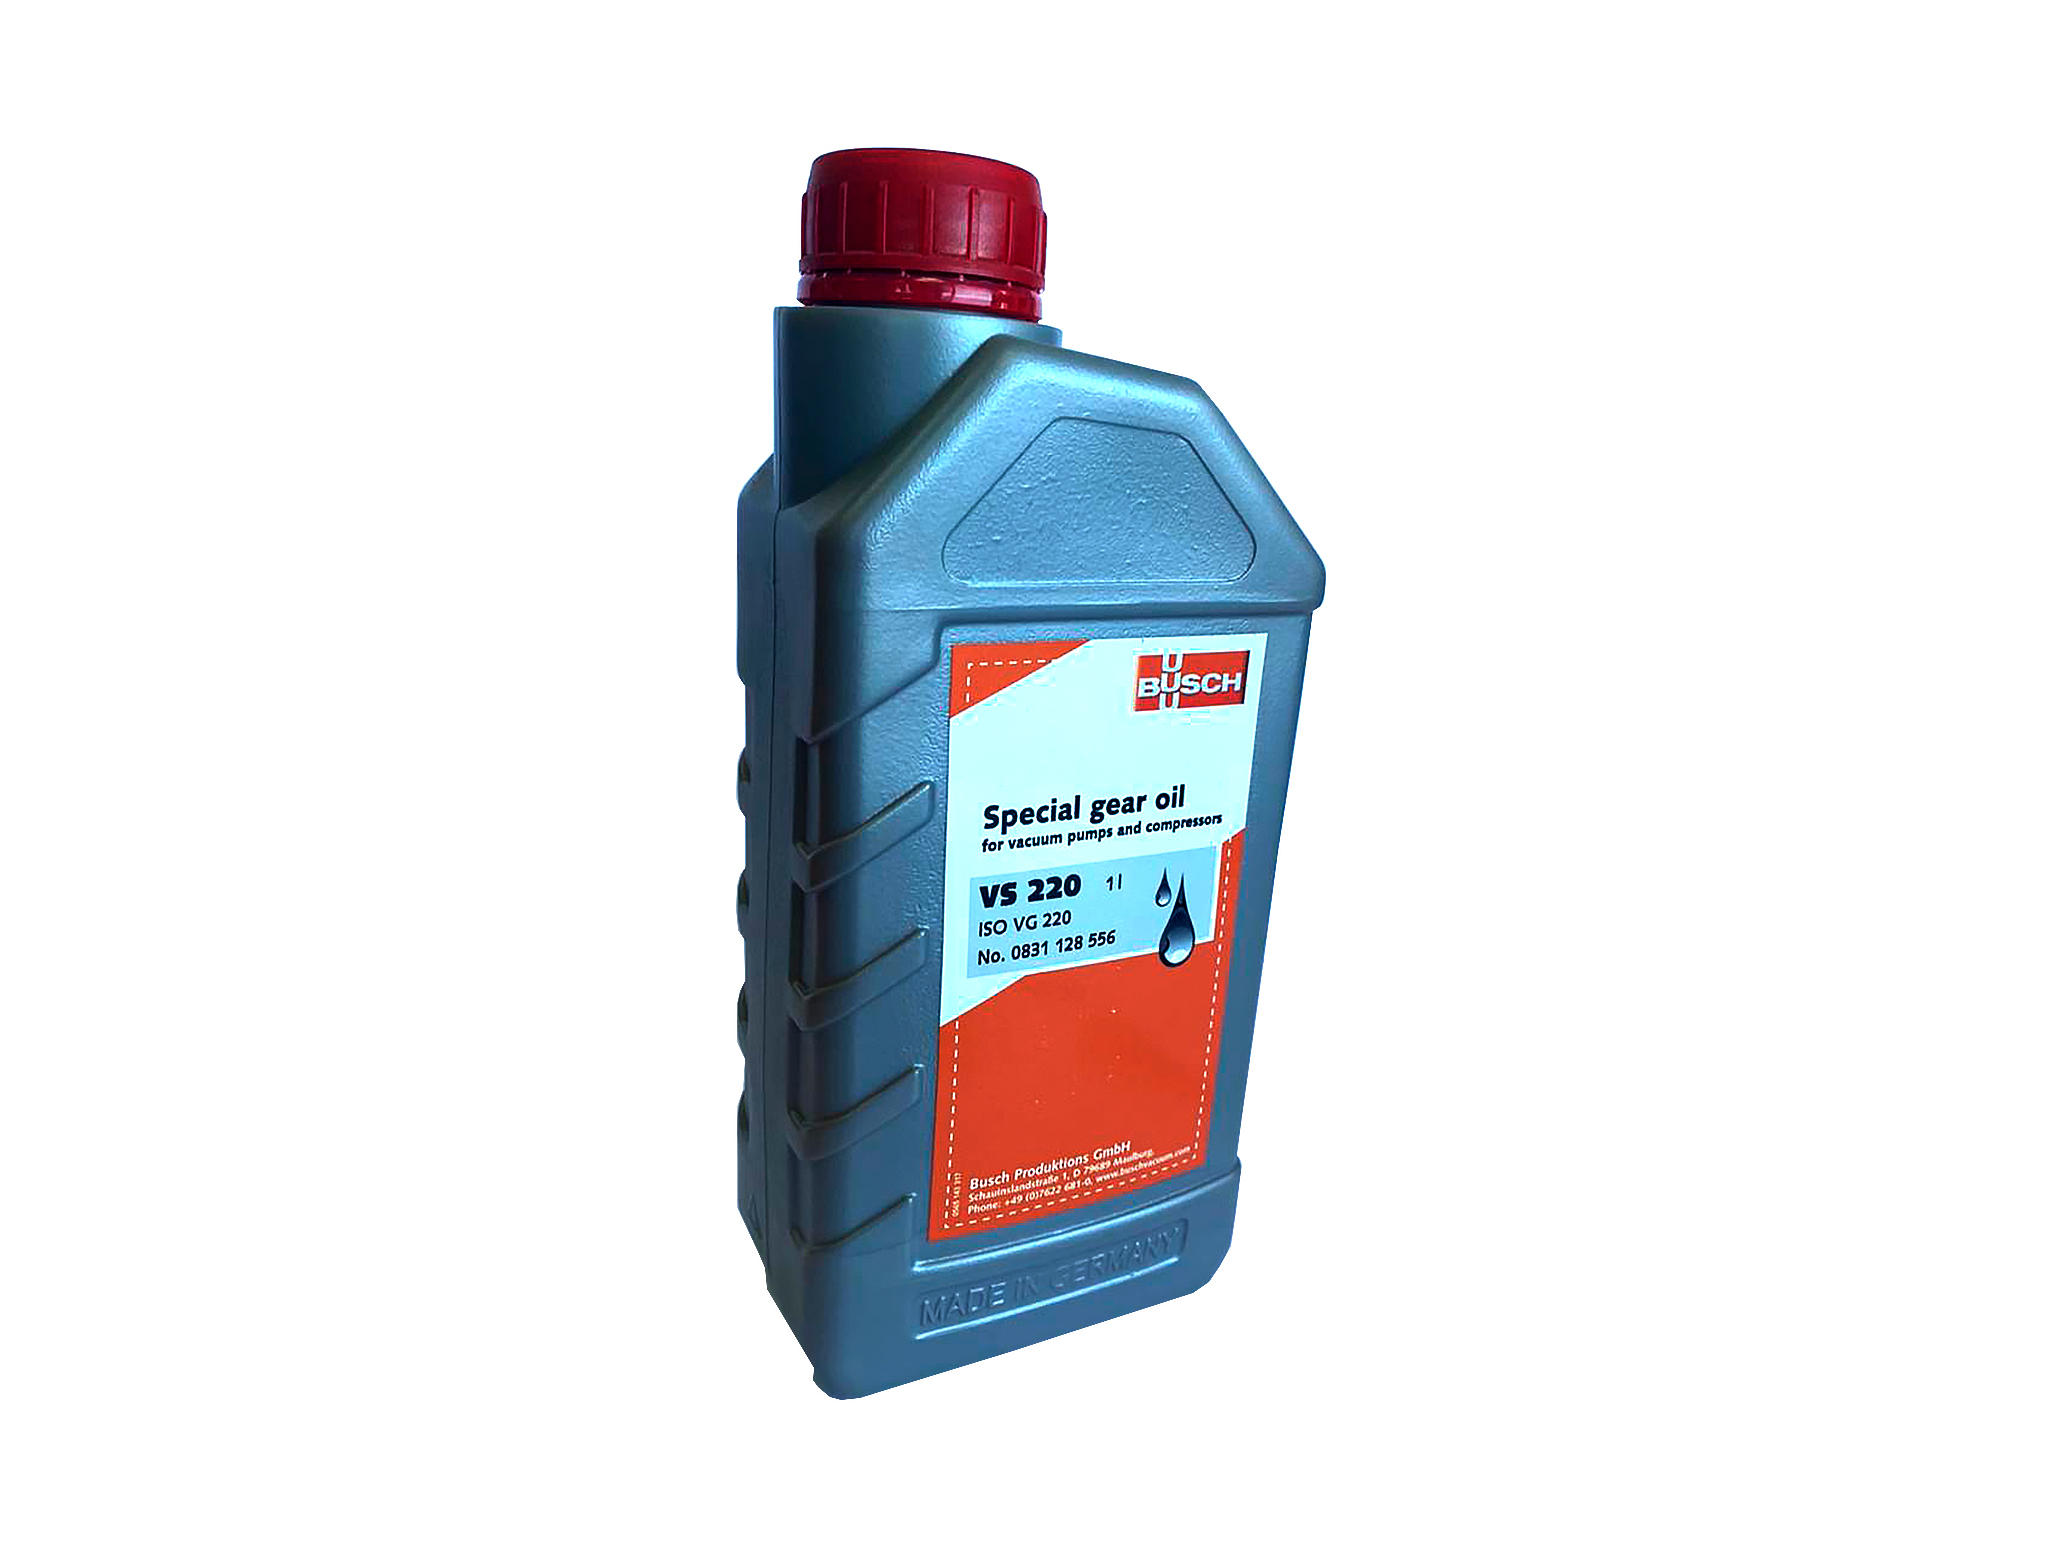 Вакуумное масло Busch VS 220 1 литр | 0831128556